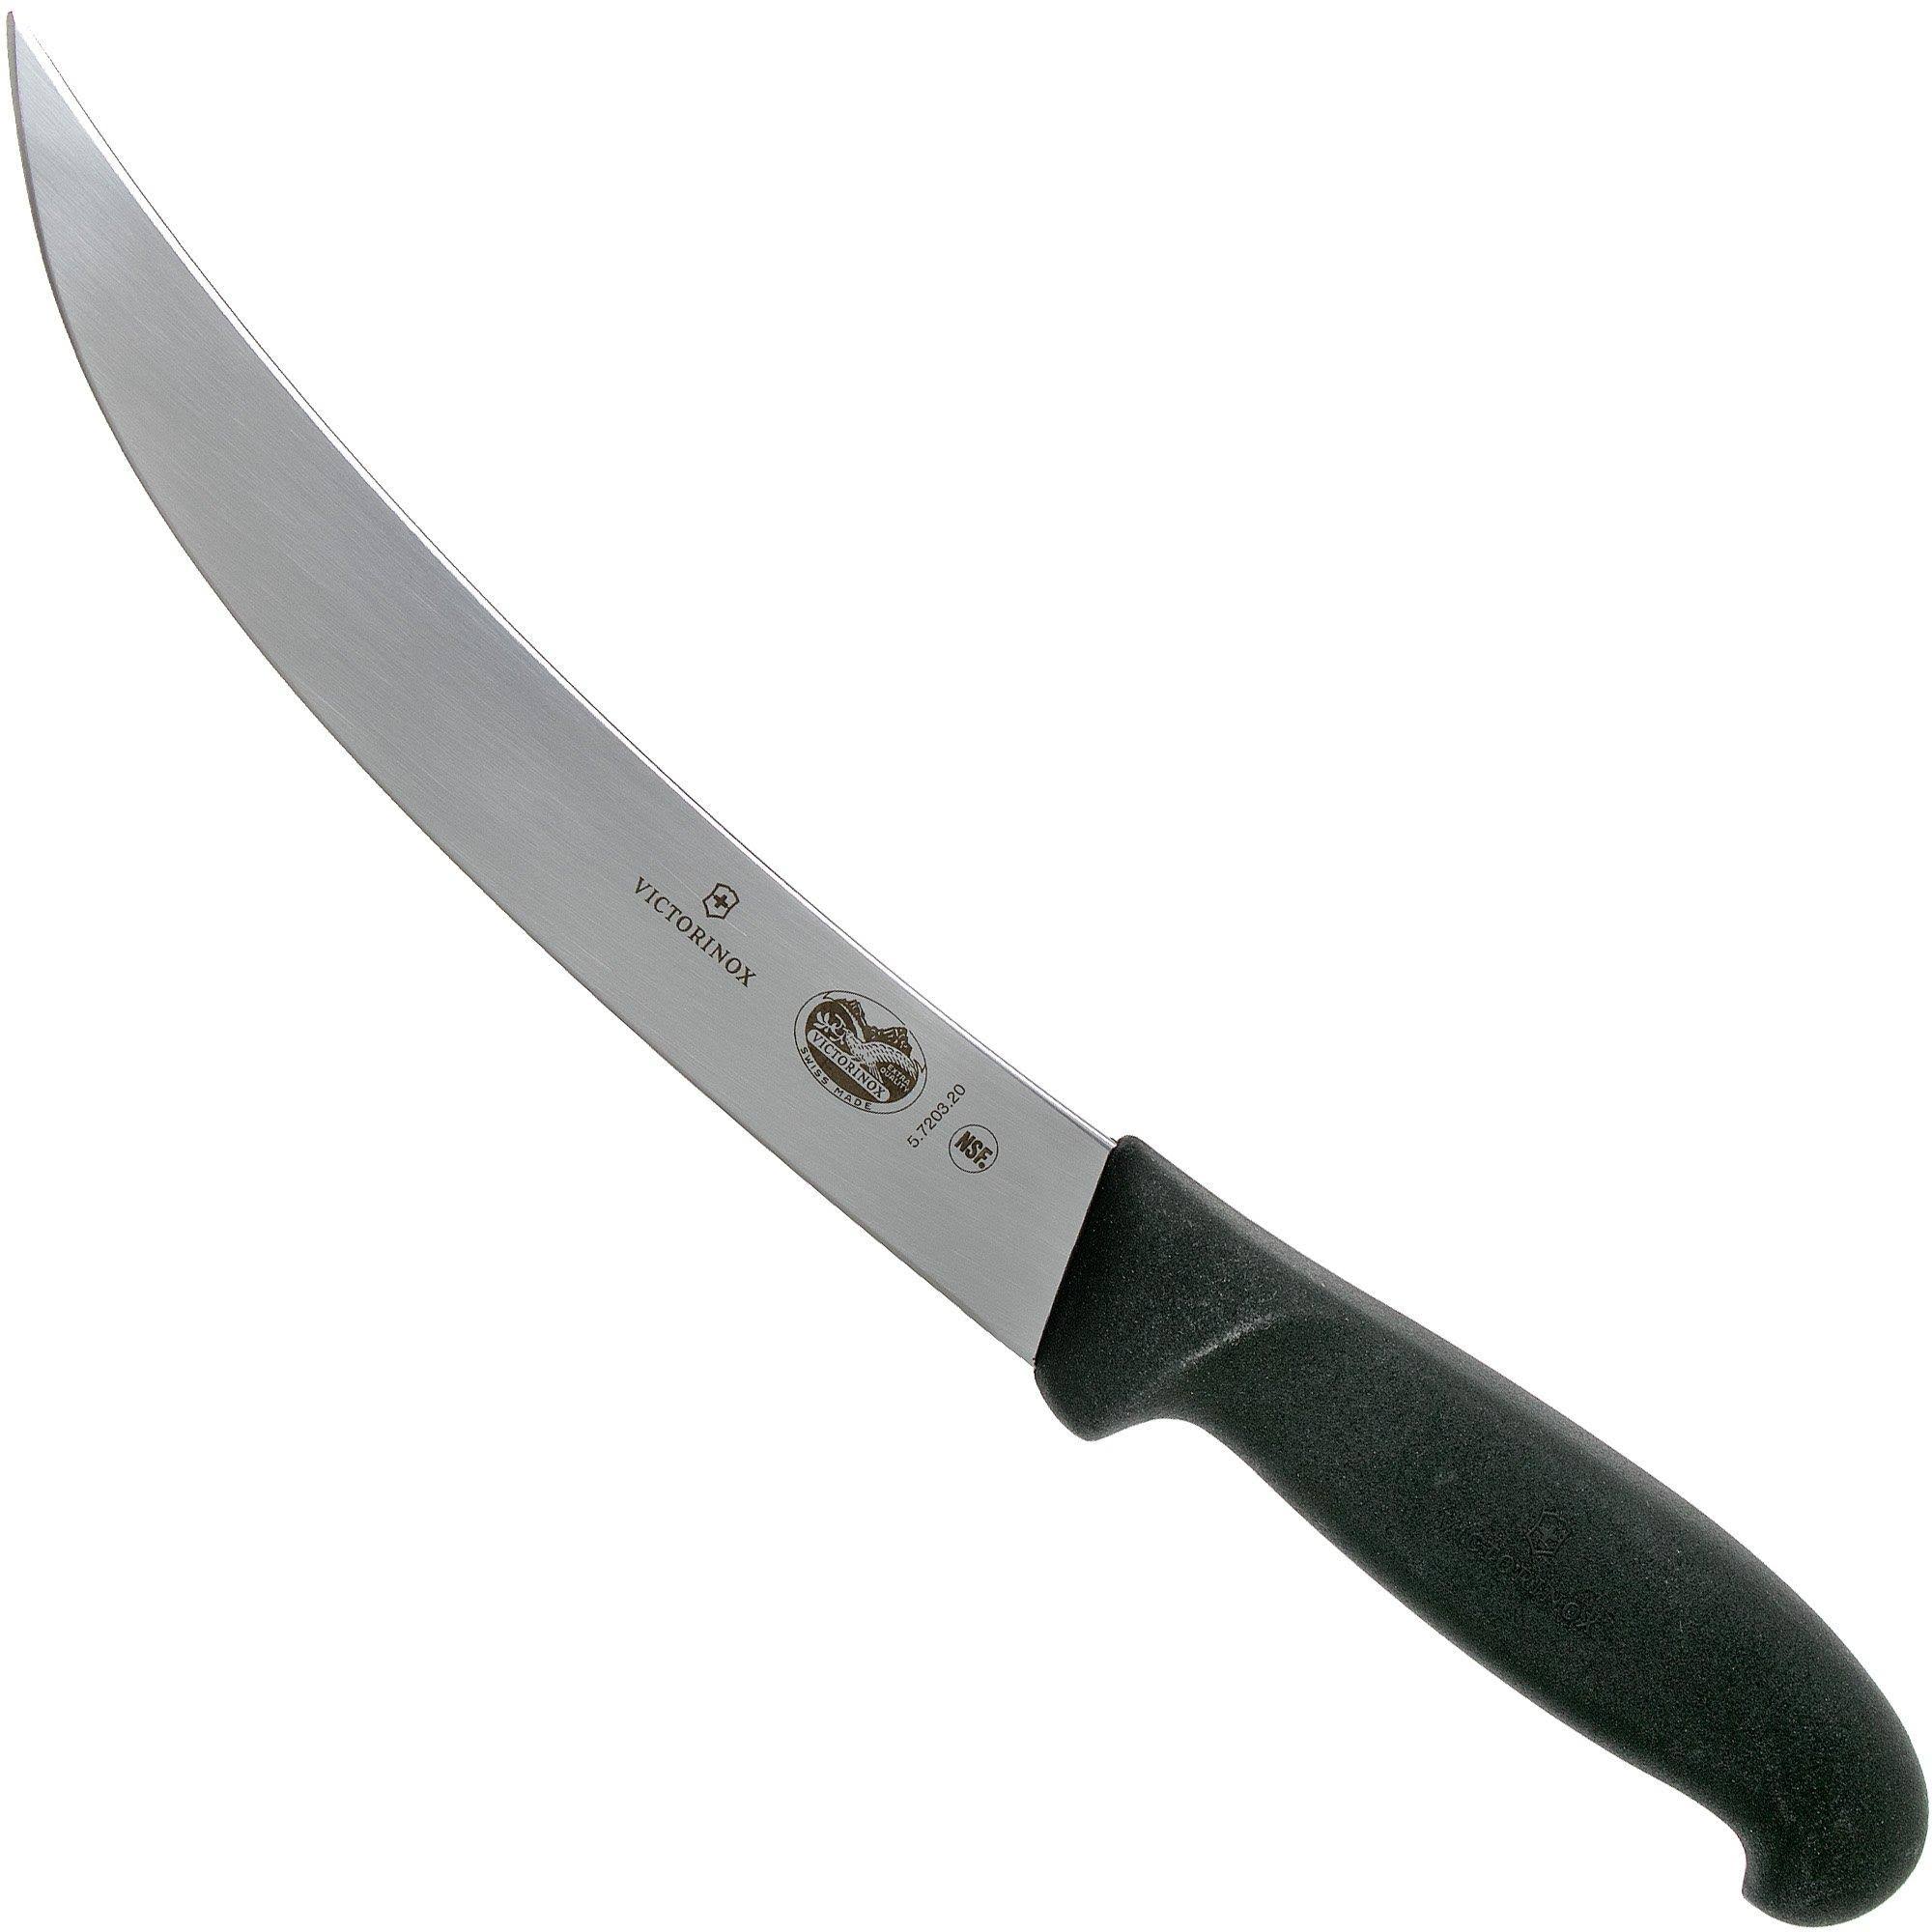 Victorinox Fibrox carving knife 20 cm, 5-7203-20